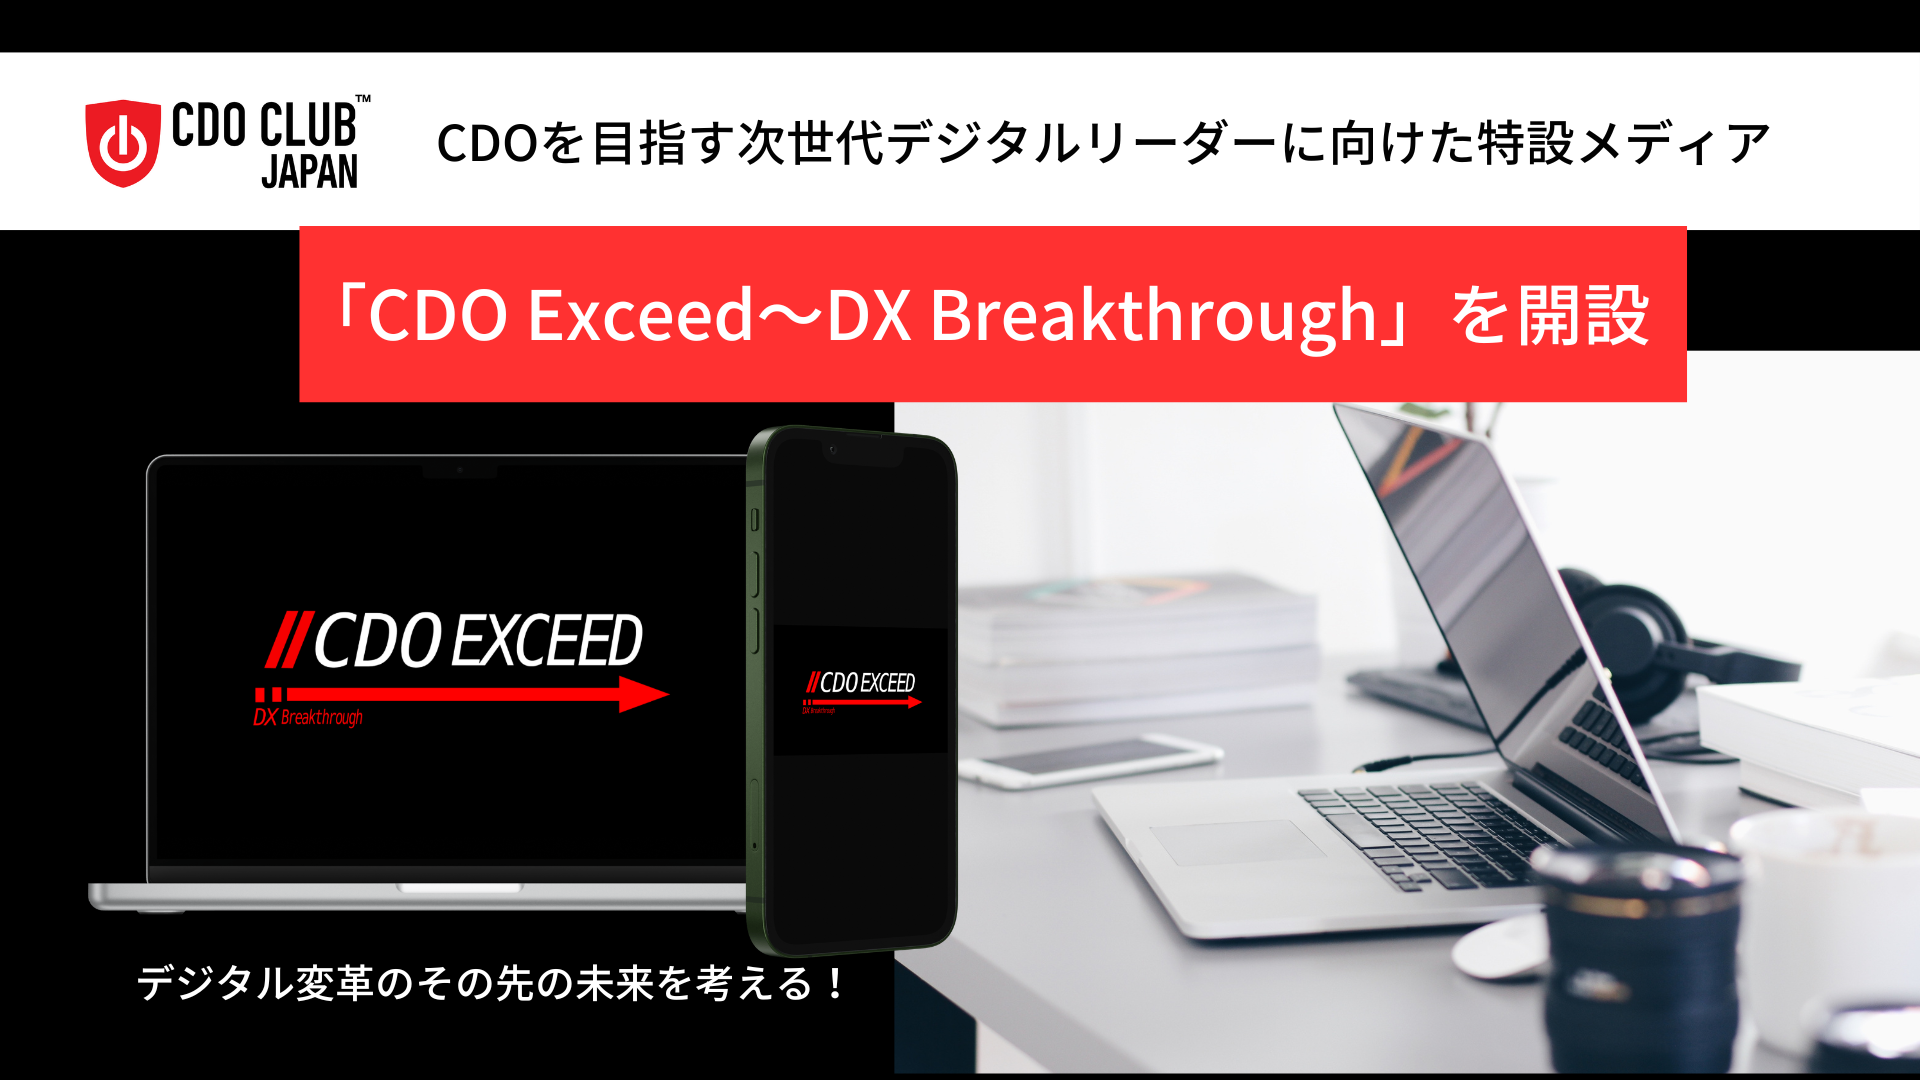 CDOڎwfW^[_[Ɍ݃fBAuCDO Exceed`DX BreakthroughvJ